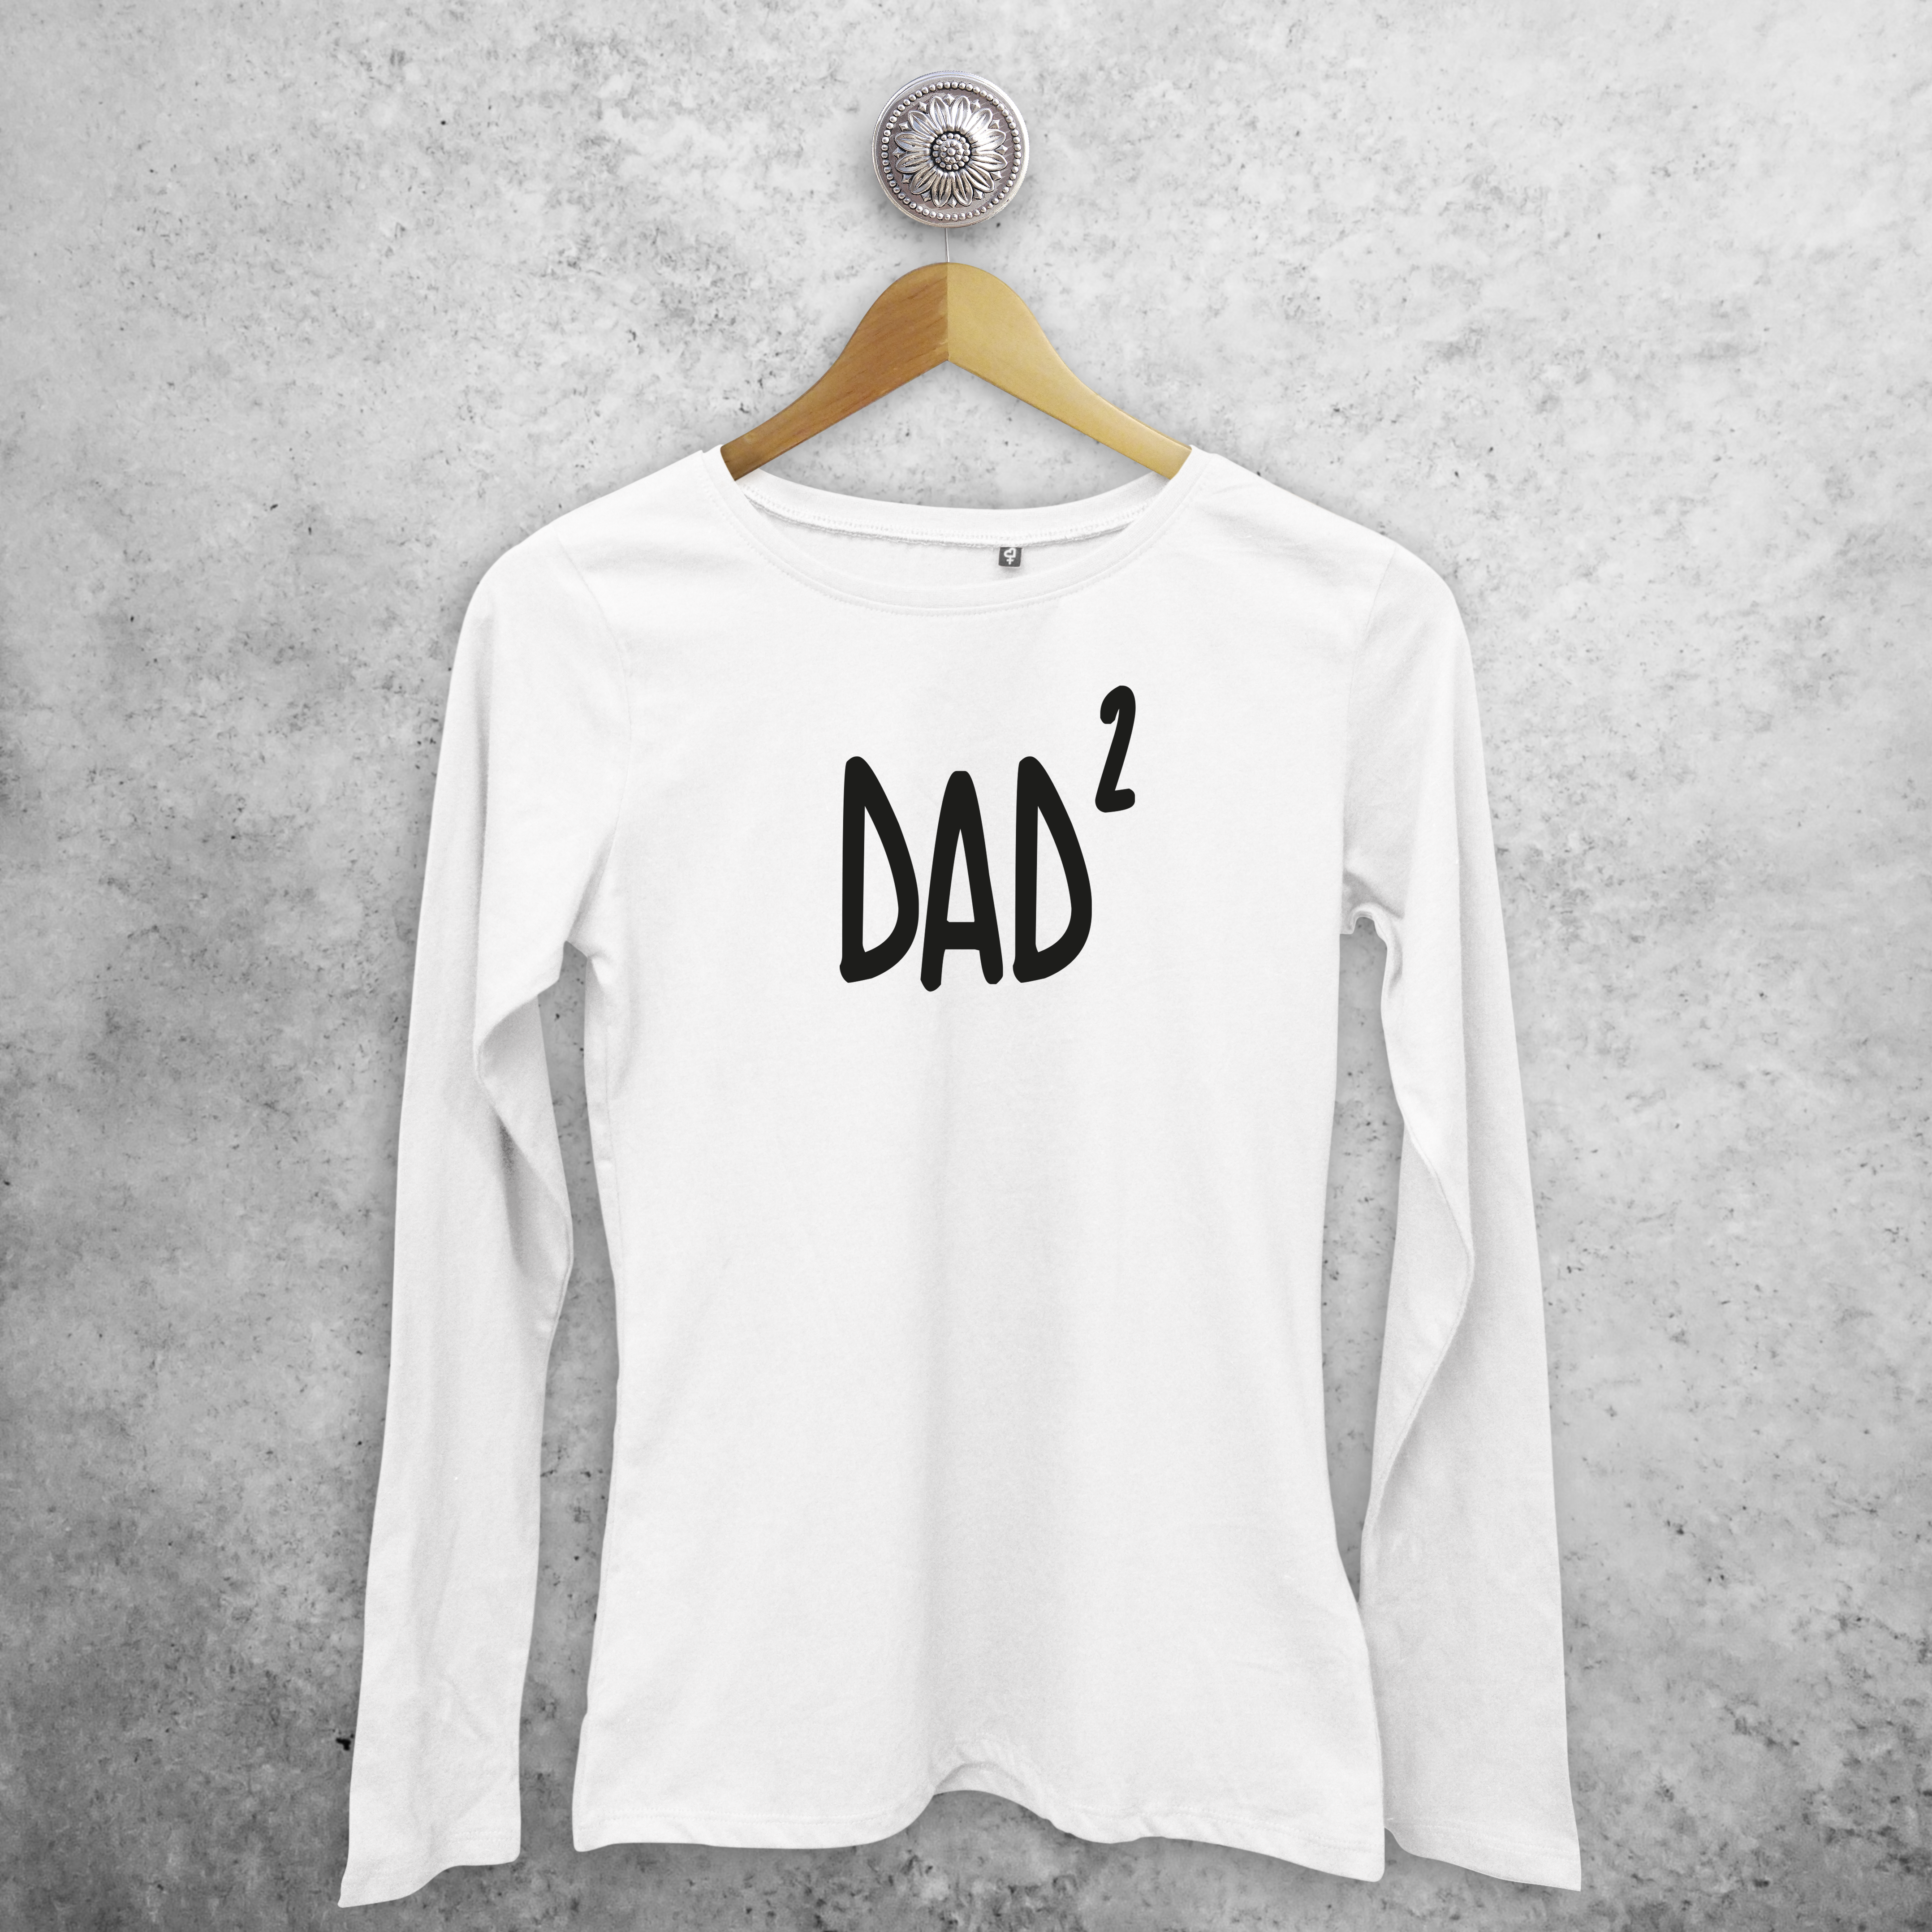 'Dad' adult longsleeve shirt